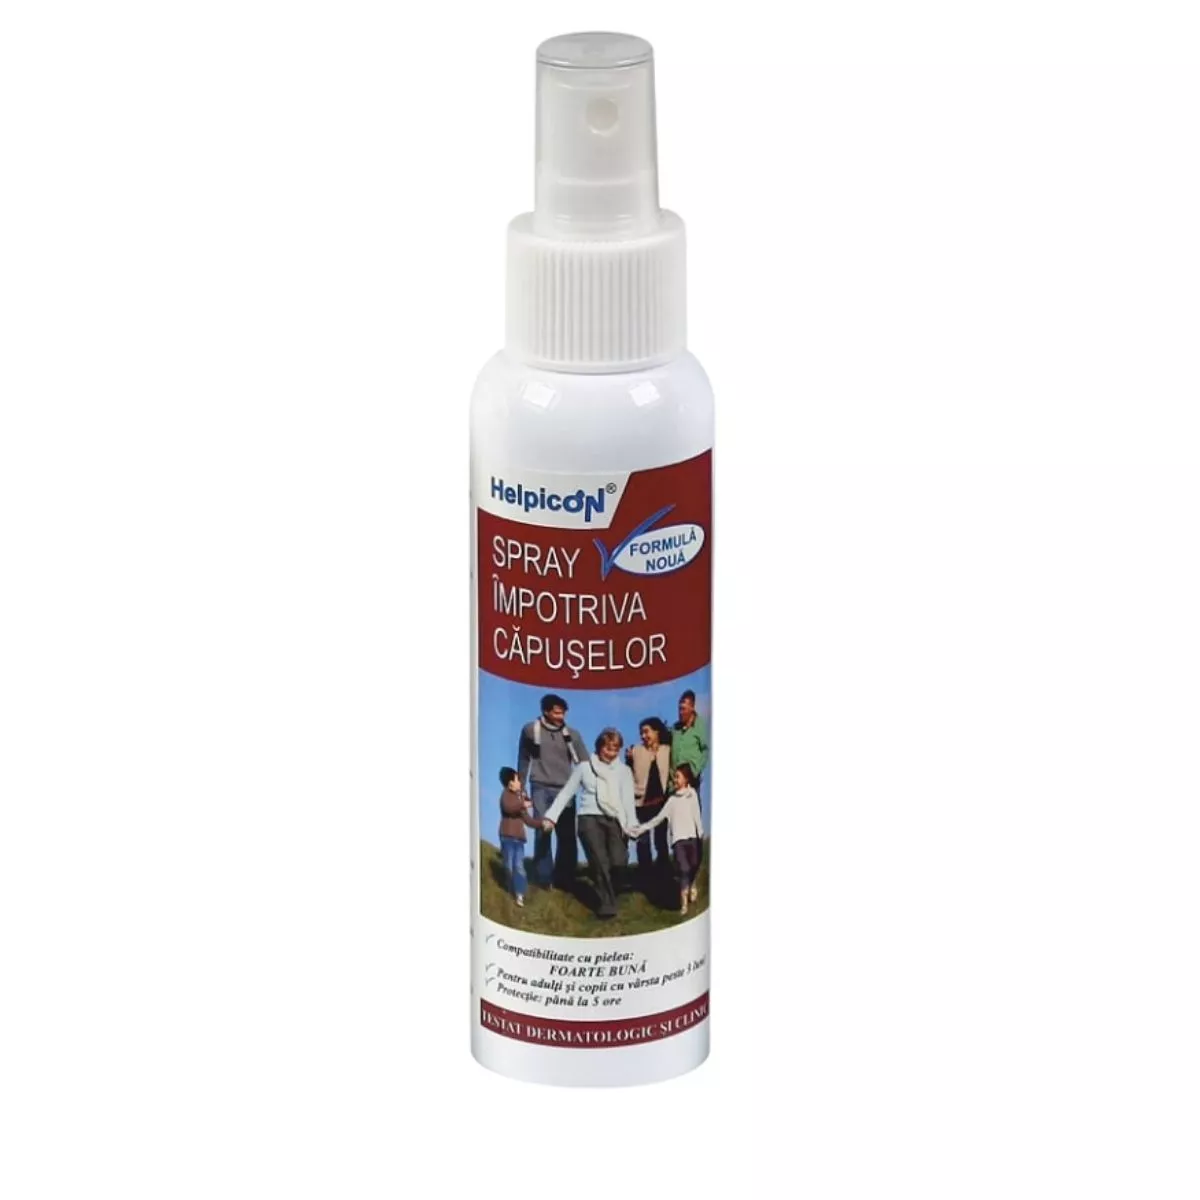 Spray impotriva capuselor HELPICON, 100 ml 1